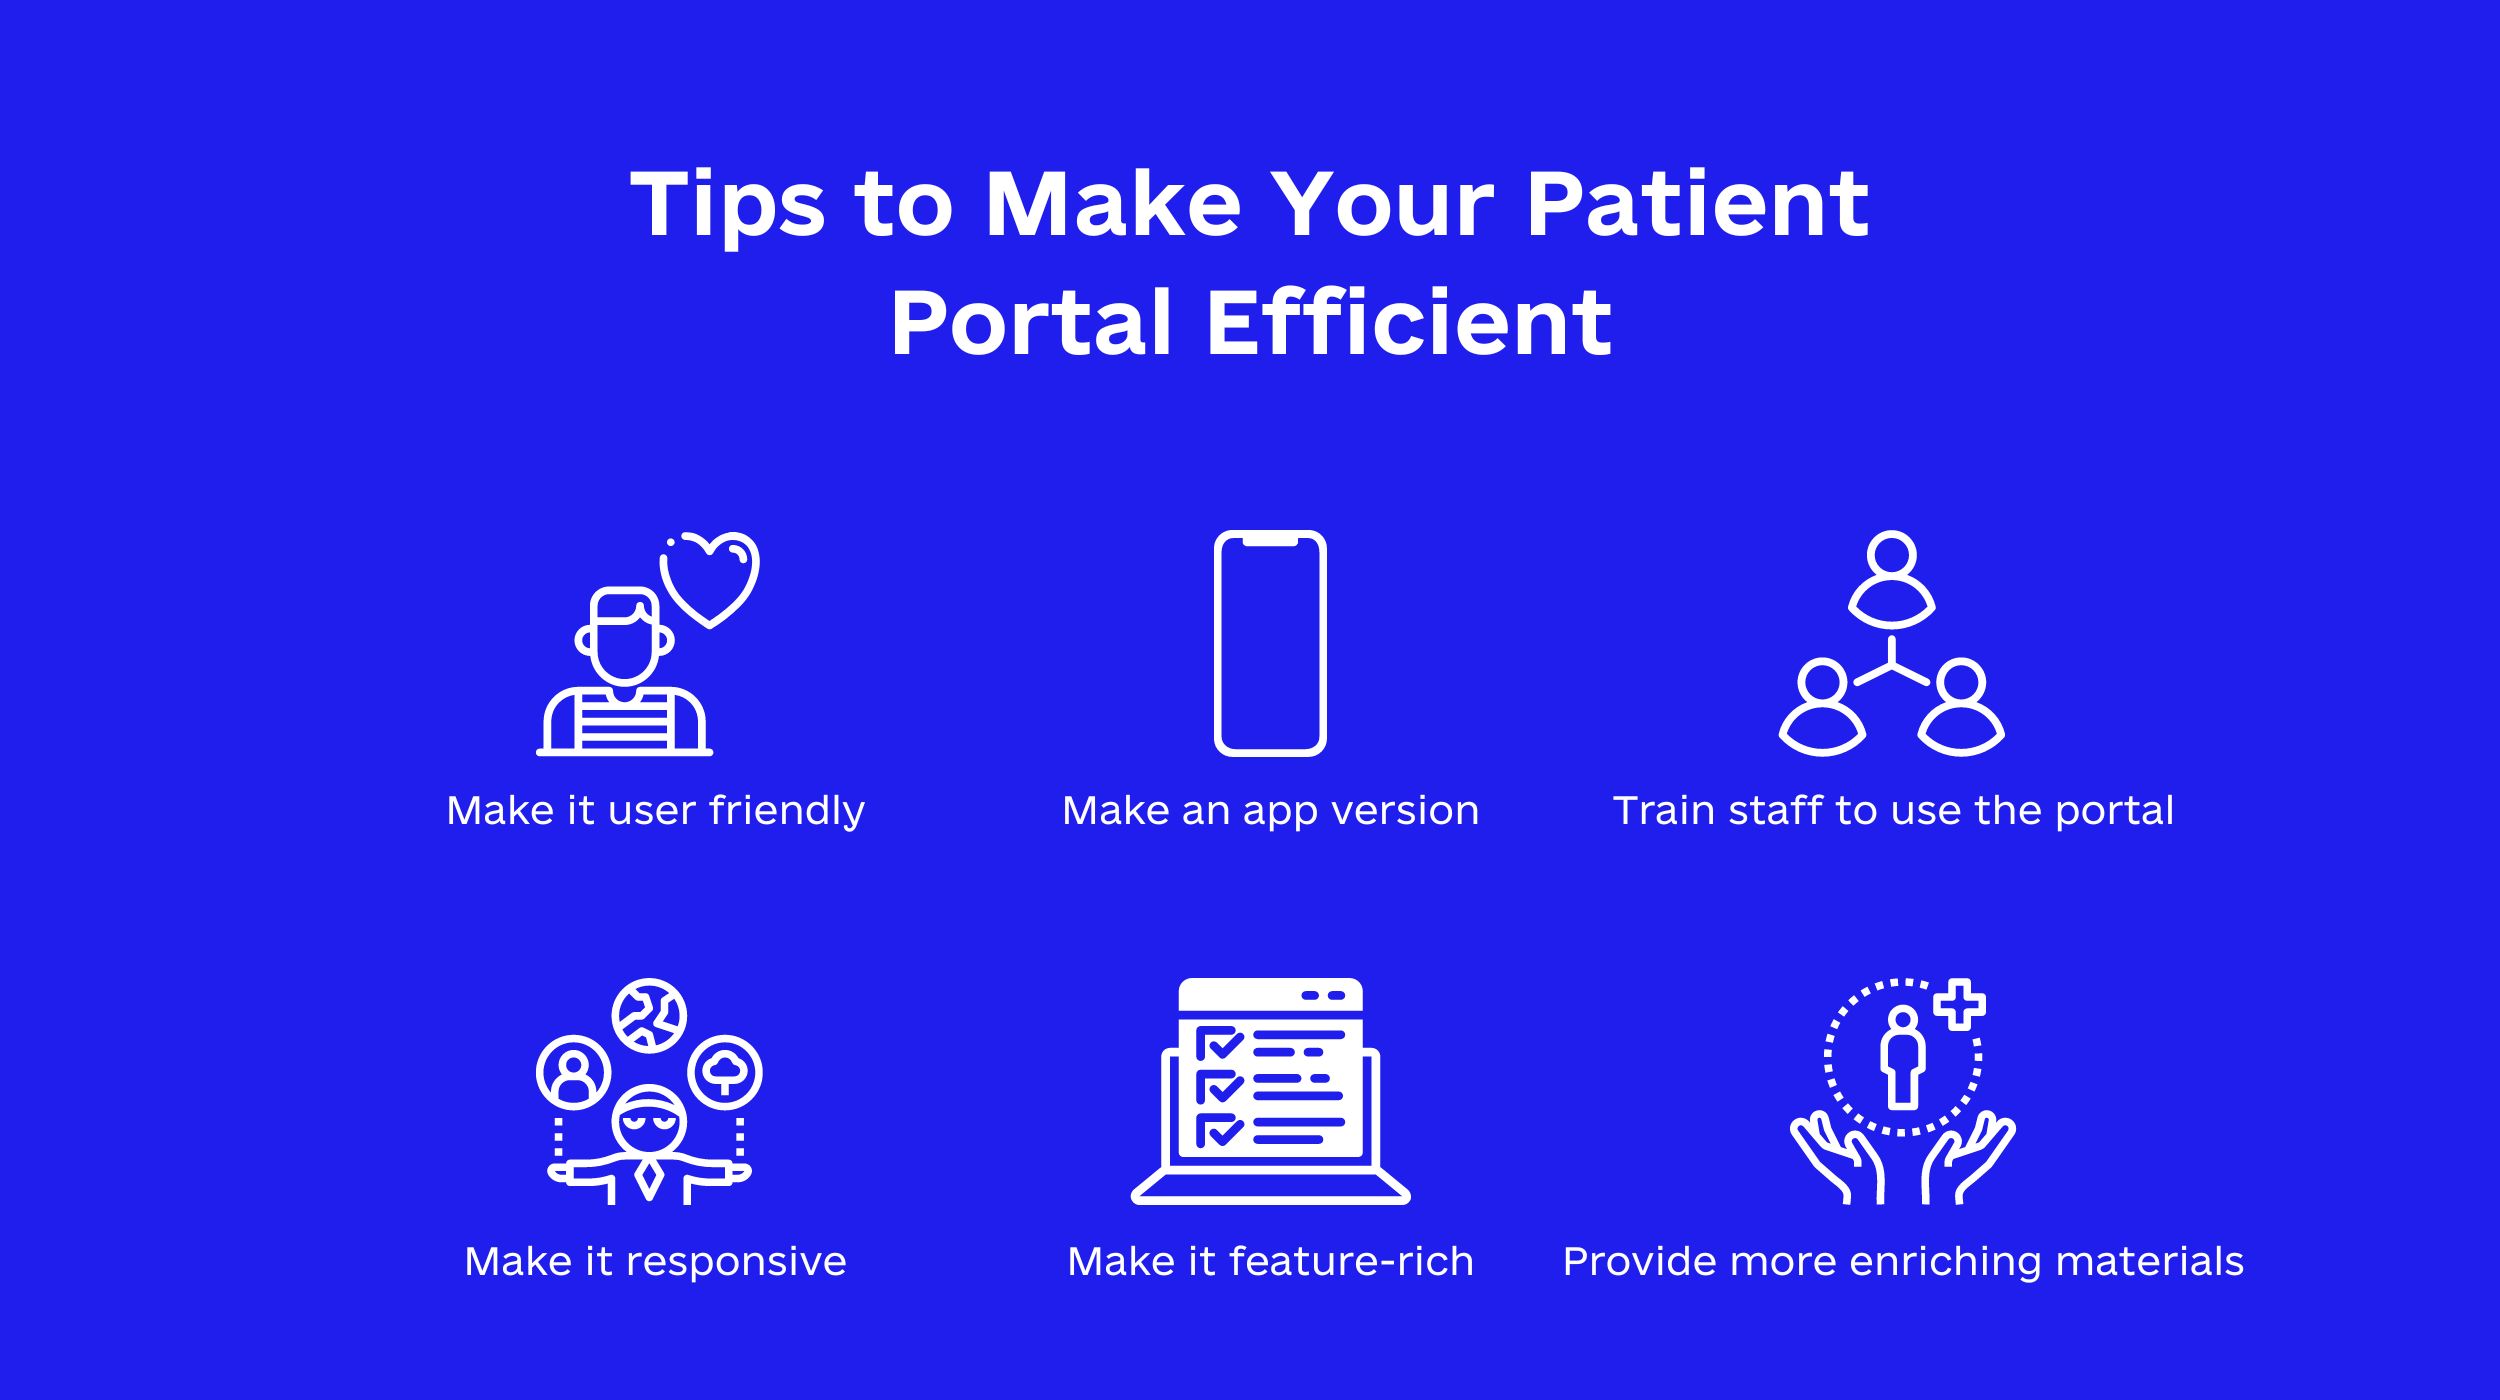 How to Make Your Patient Portal Efficient